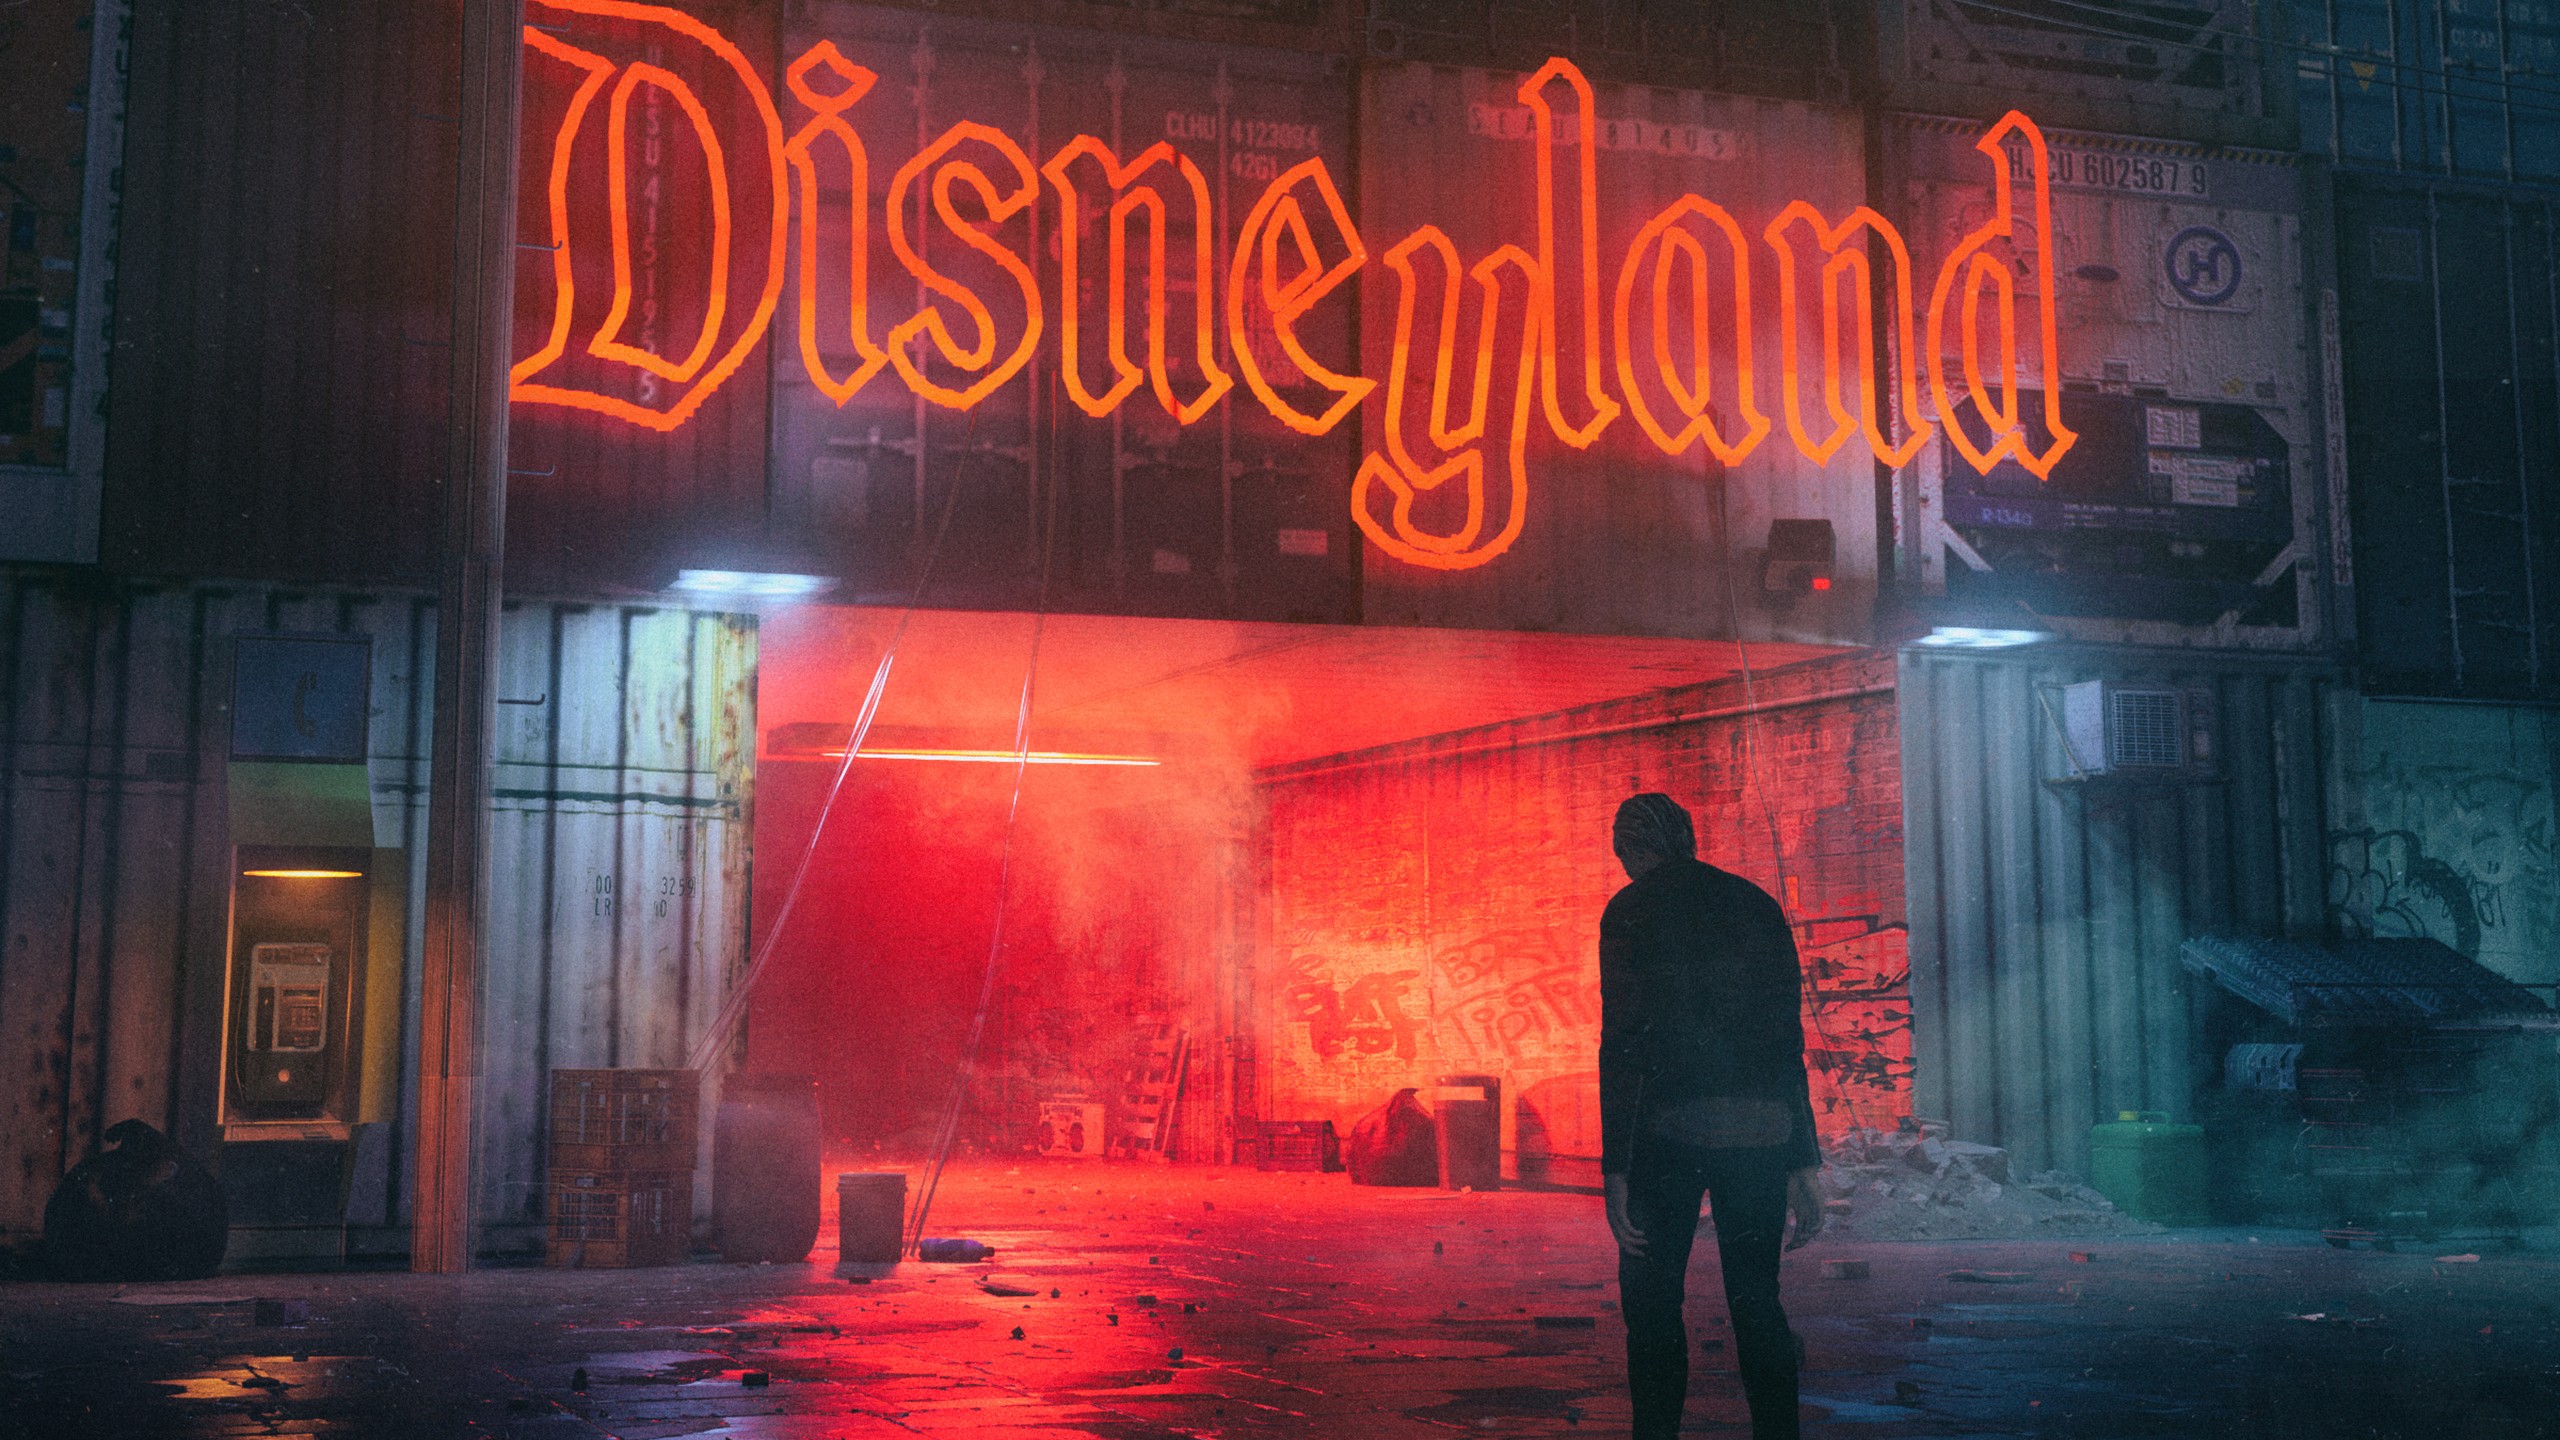 Neon Disneyland